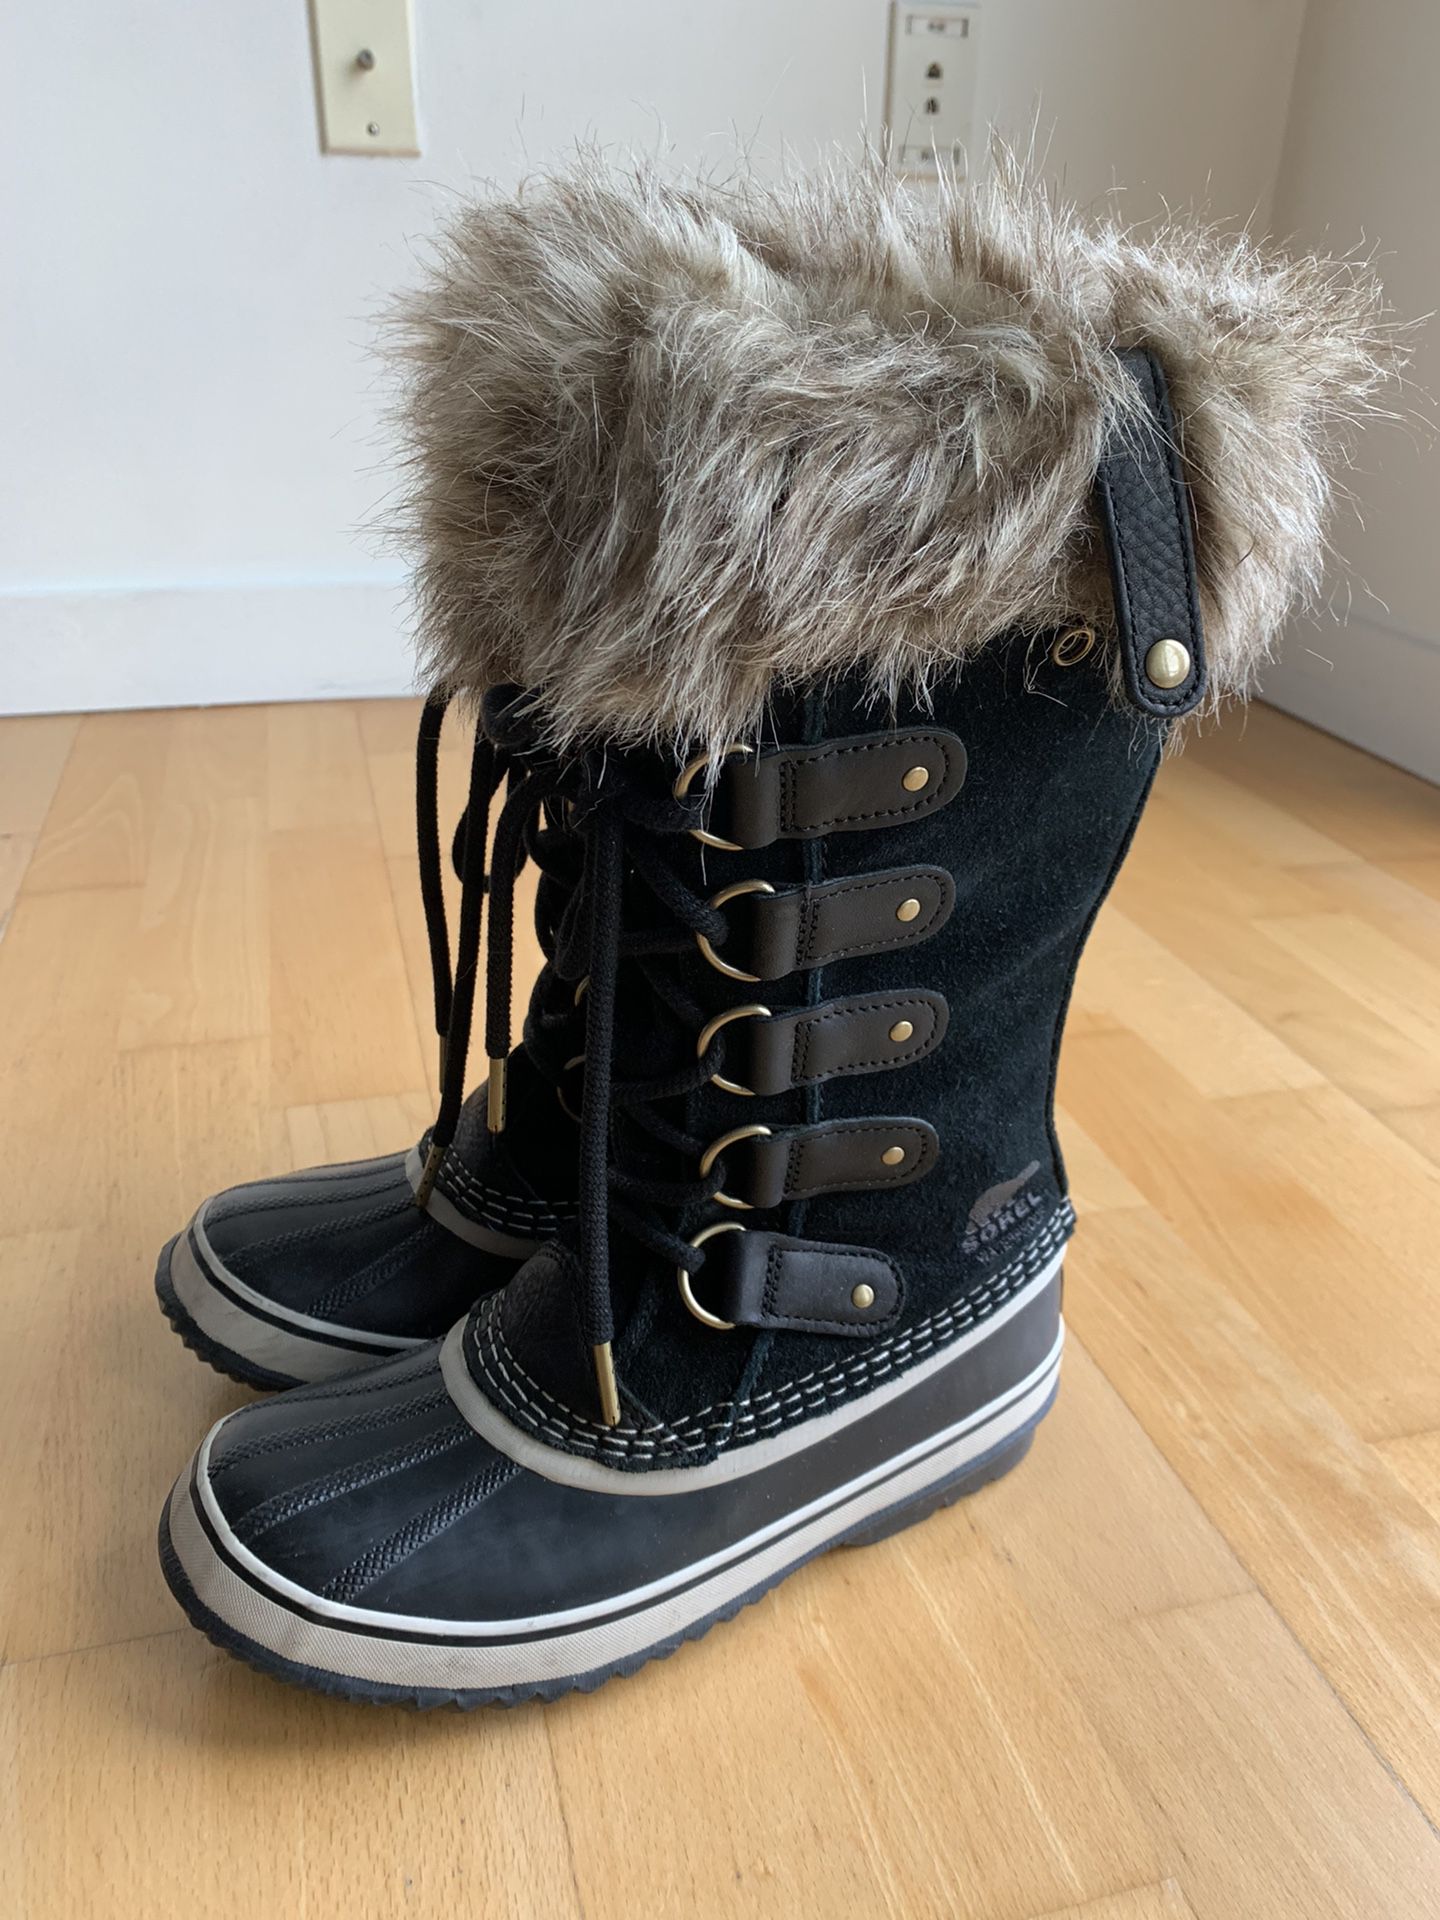 Sorel Snow Boot Joan of Arctic women’s size 6.5